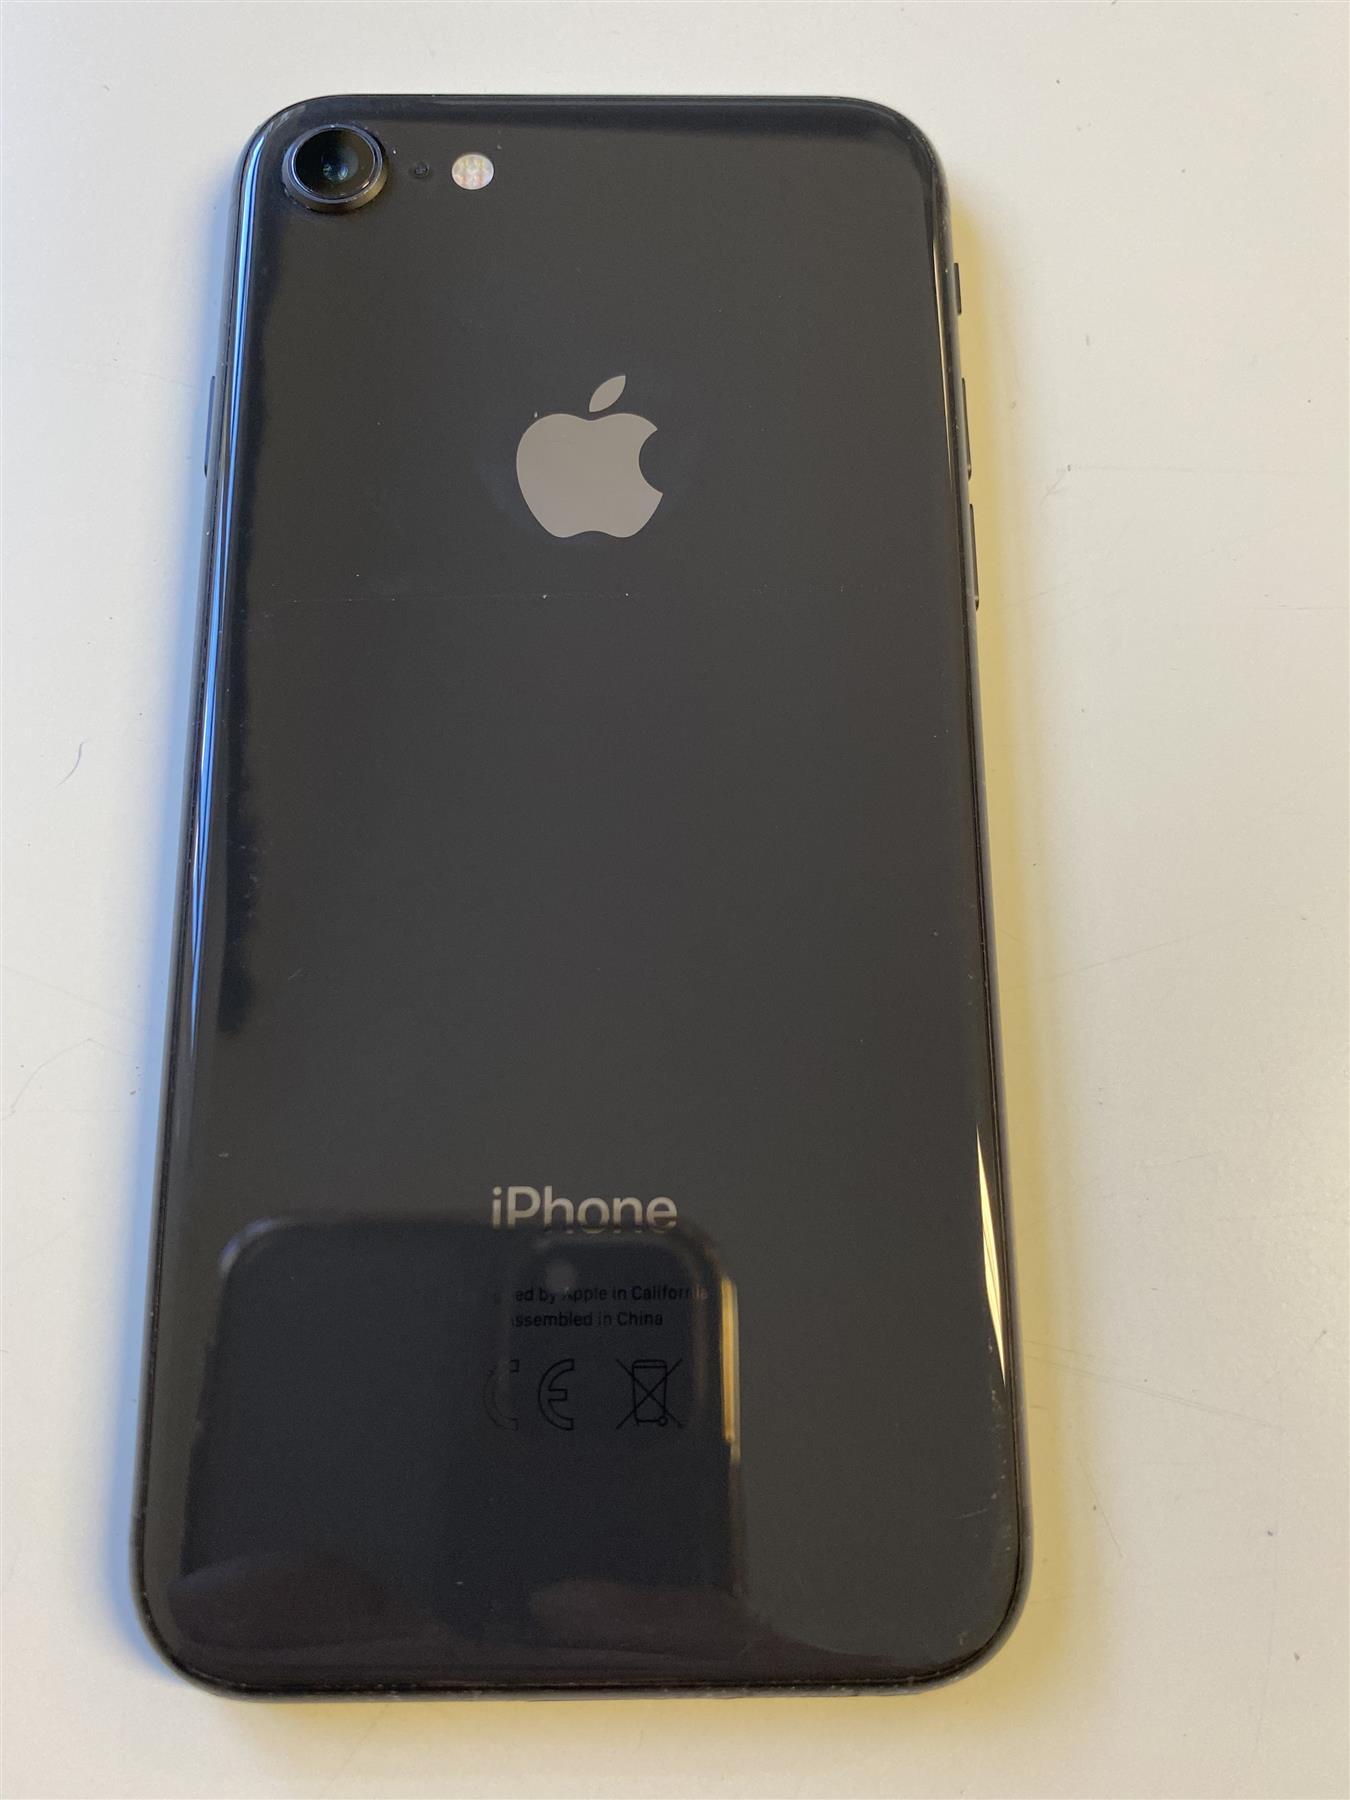 Apple iPhone 8 64GB Space Grey Unlocked - Used